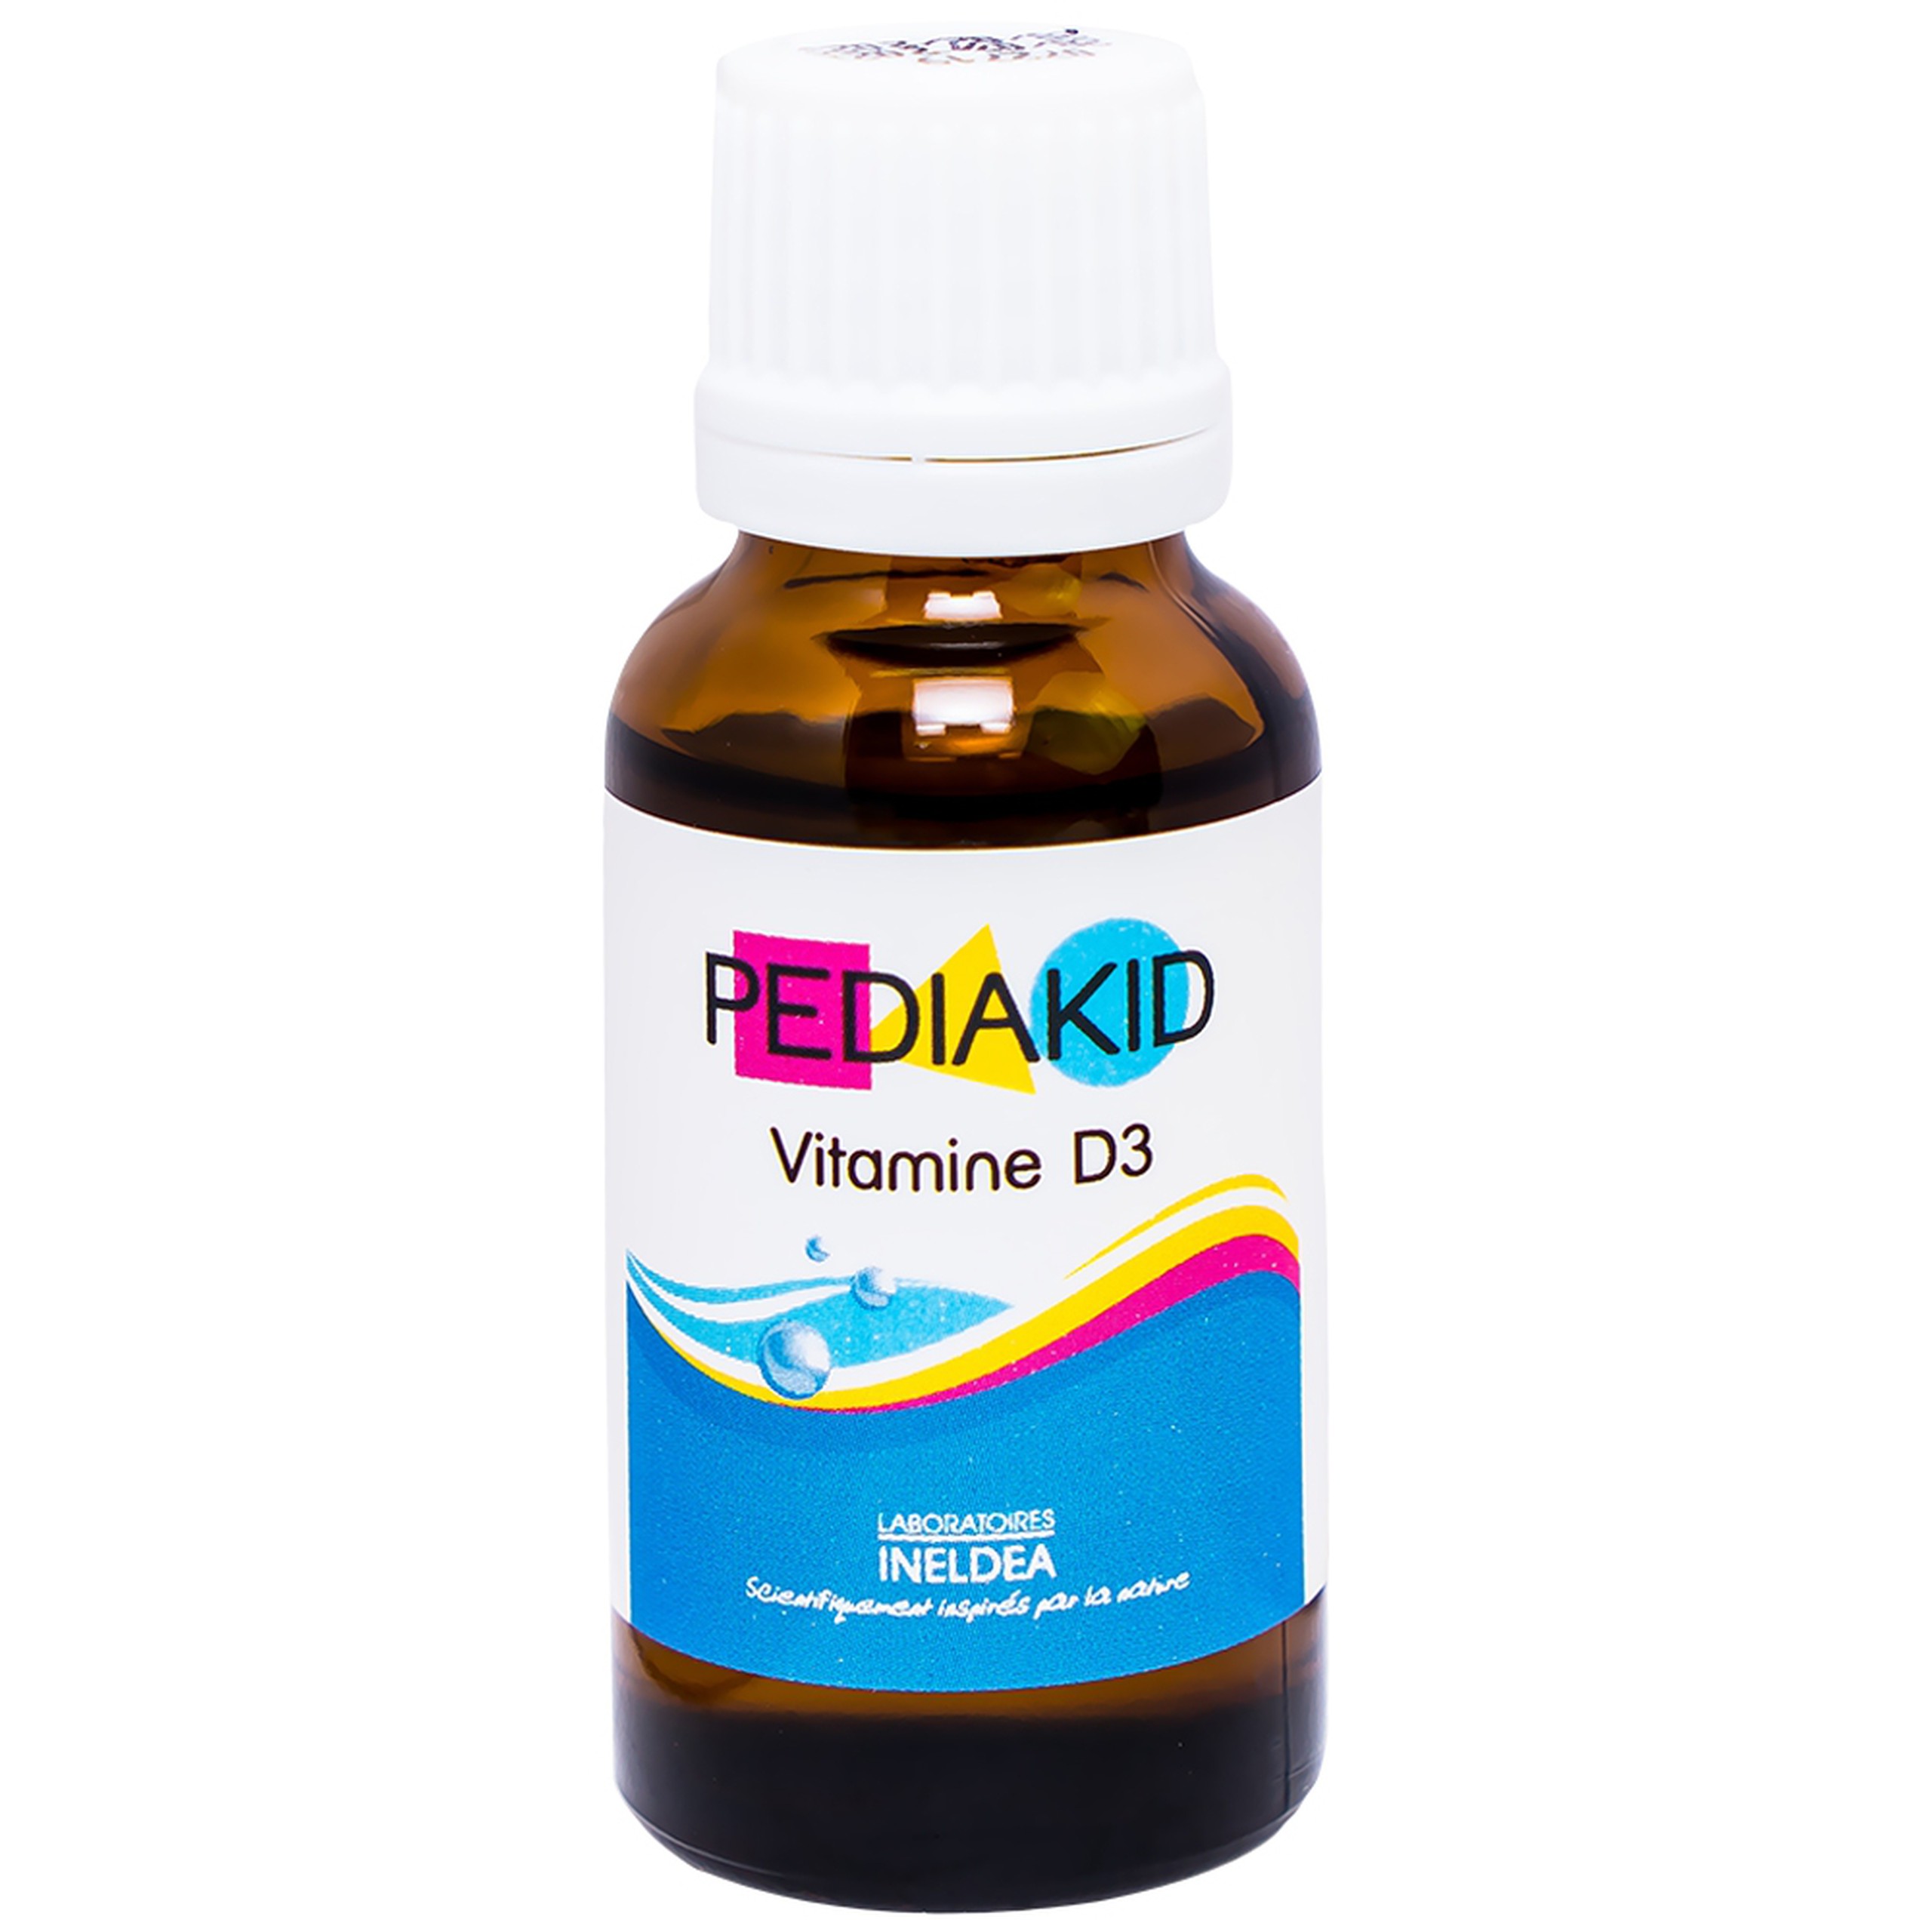 Siro Pediakid Vitamin D3 bổ sung Vitamin D cho cơ thể, tăng hấp thụ canxi (20ml)